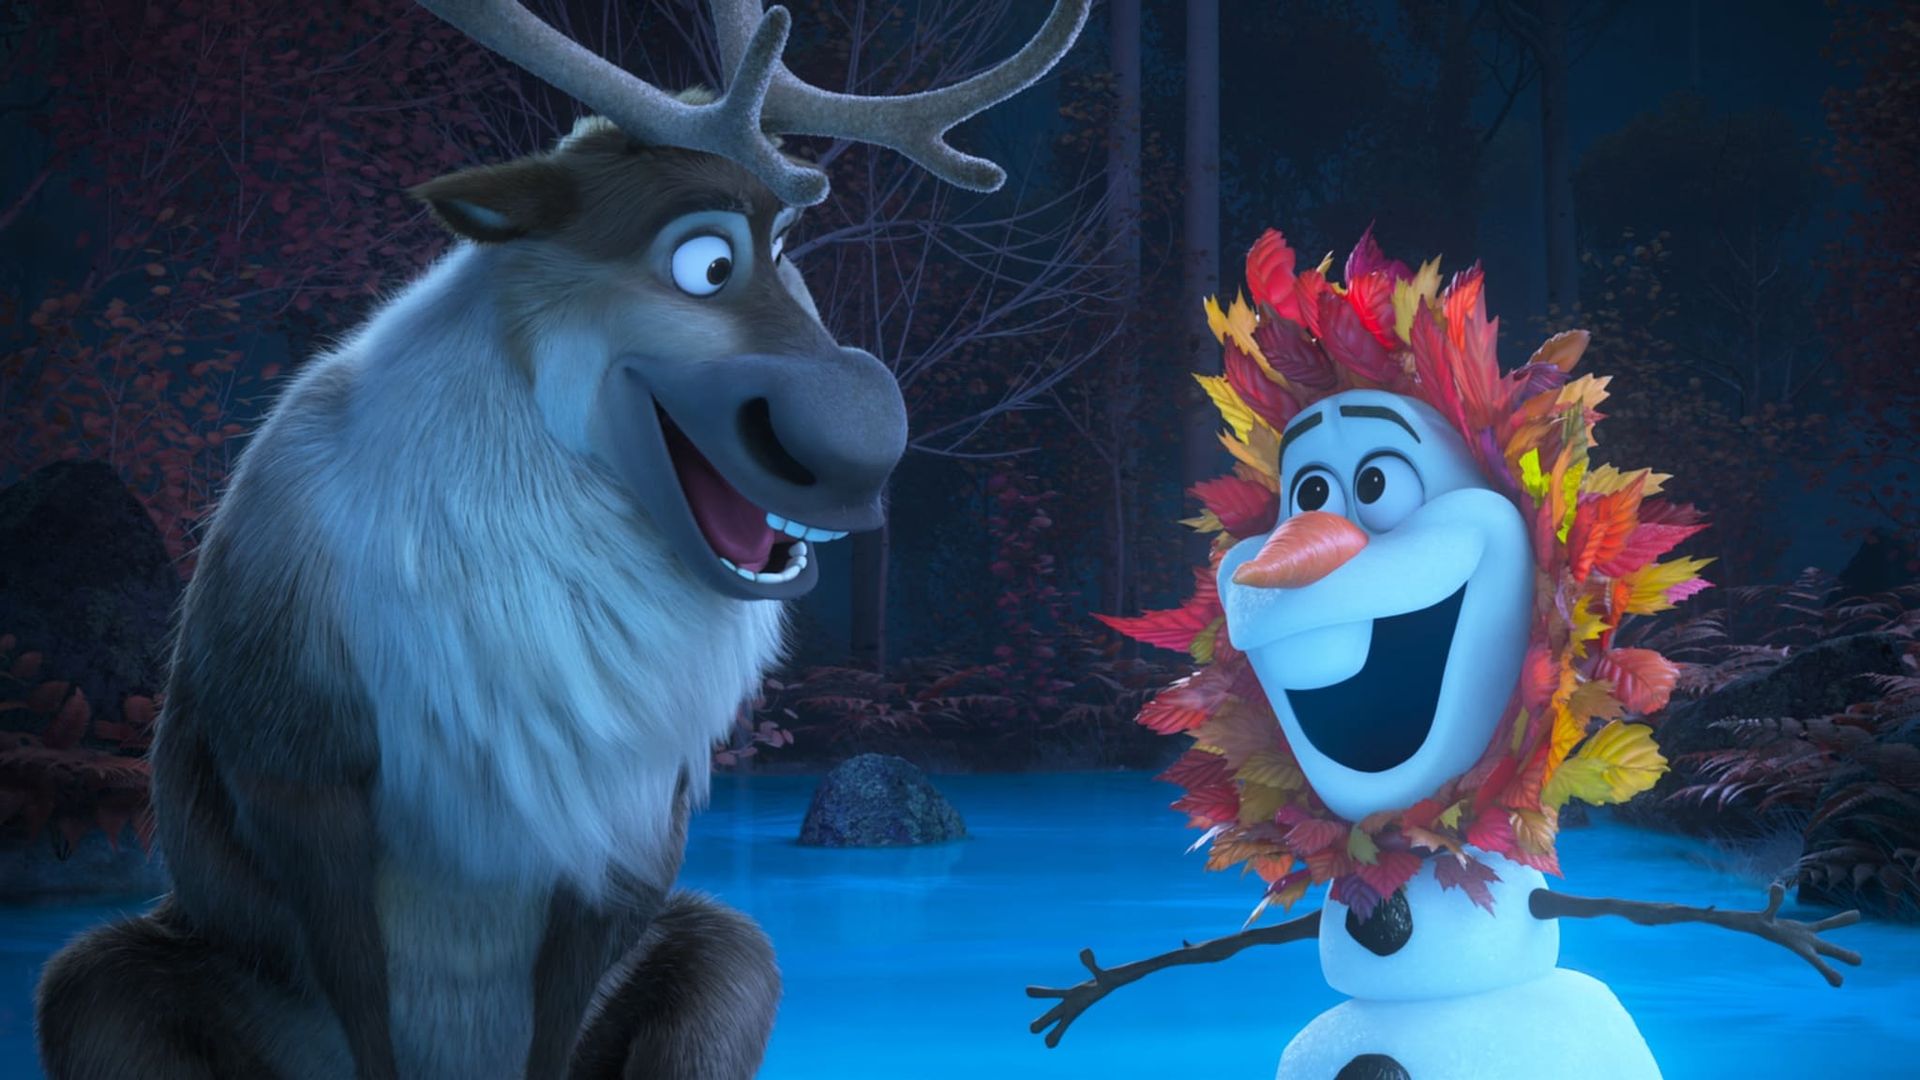 Olaf Presents background